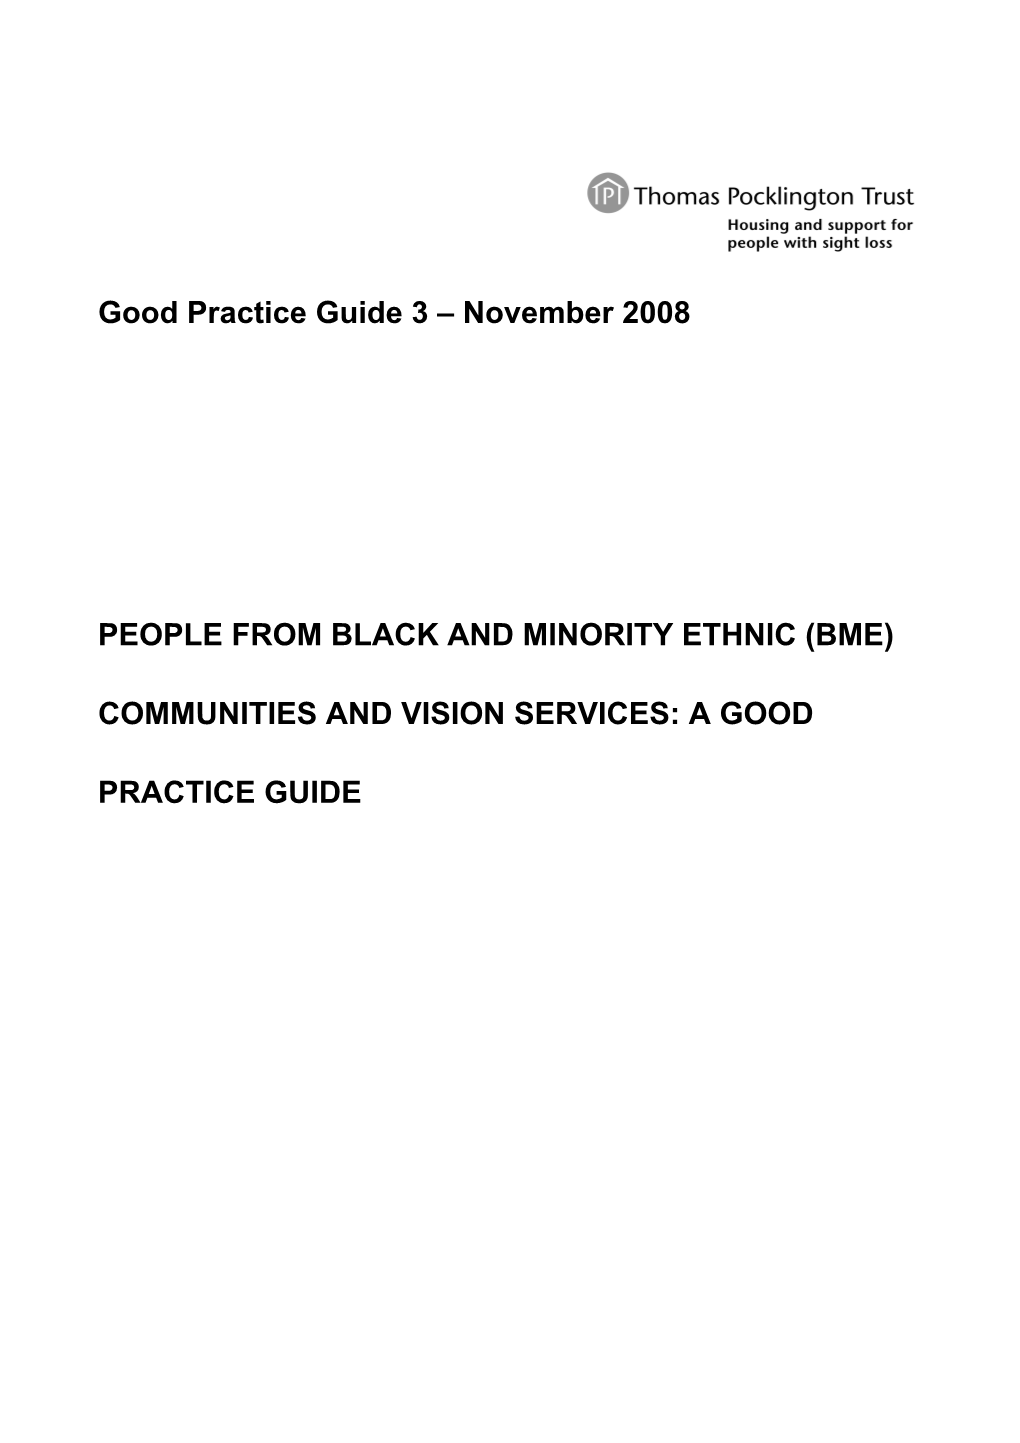 Good Practice Guide 3 November 2008